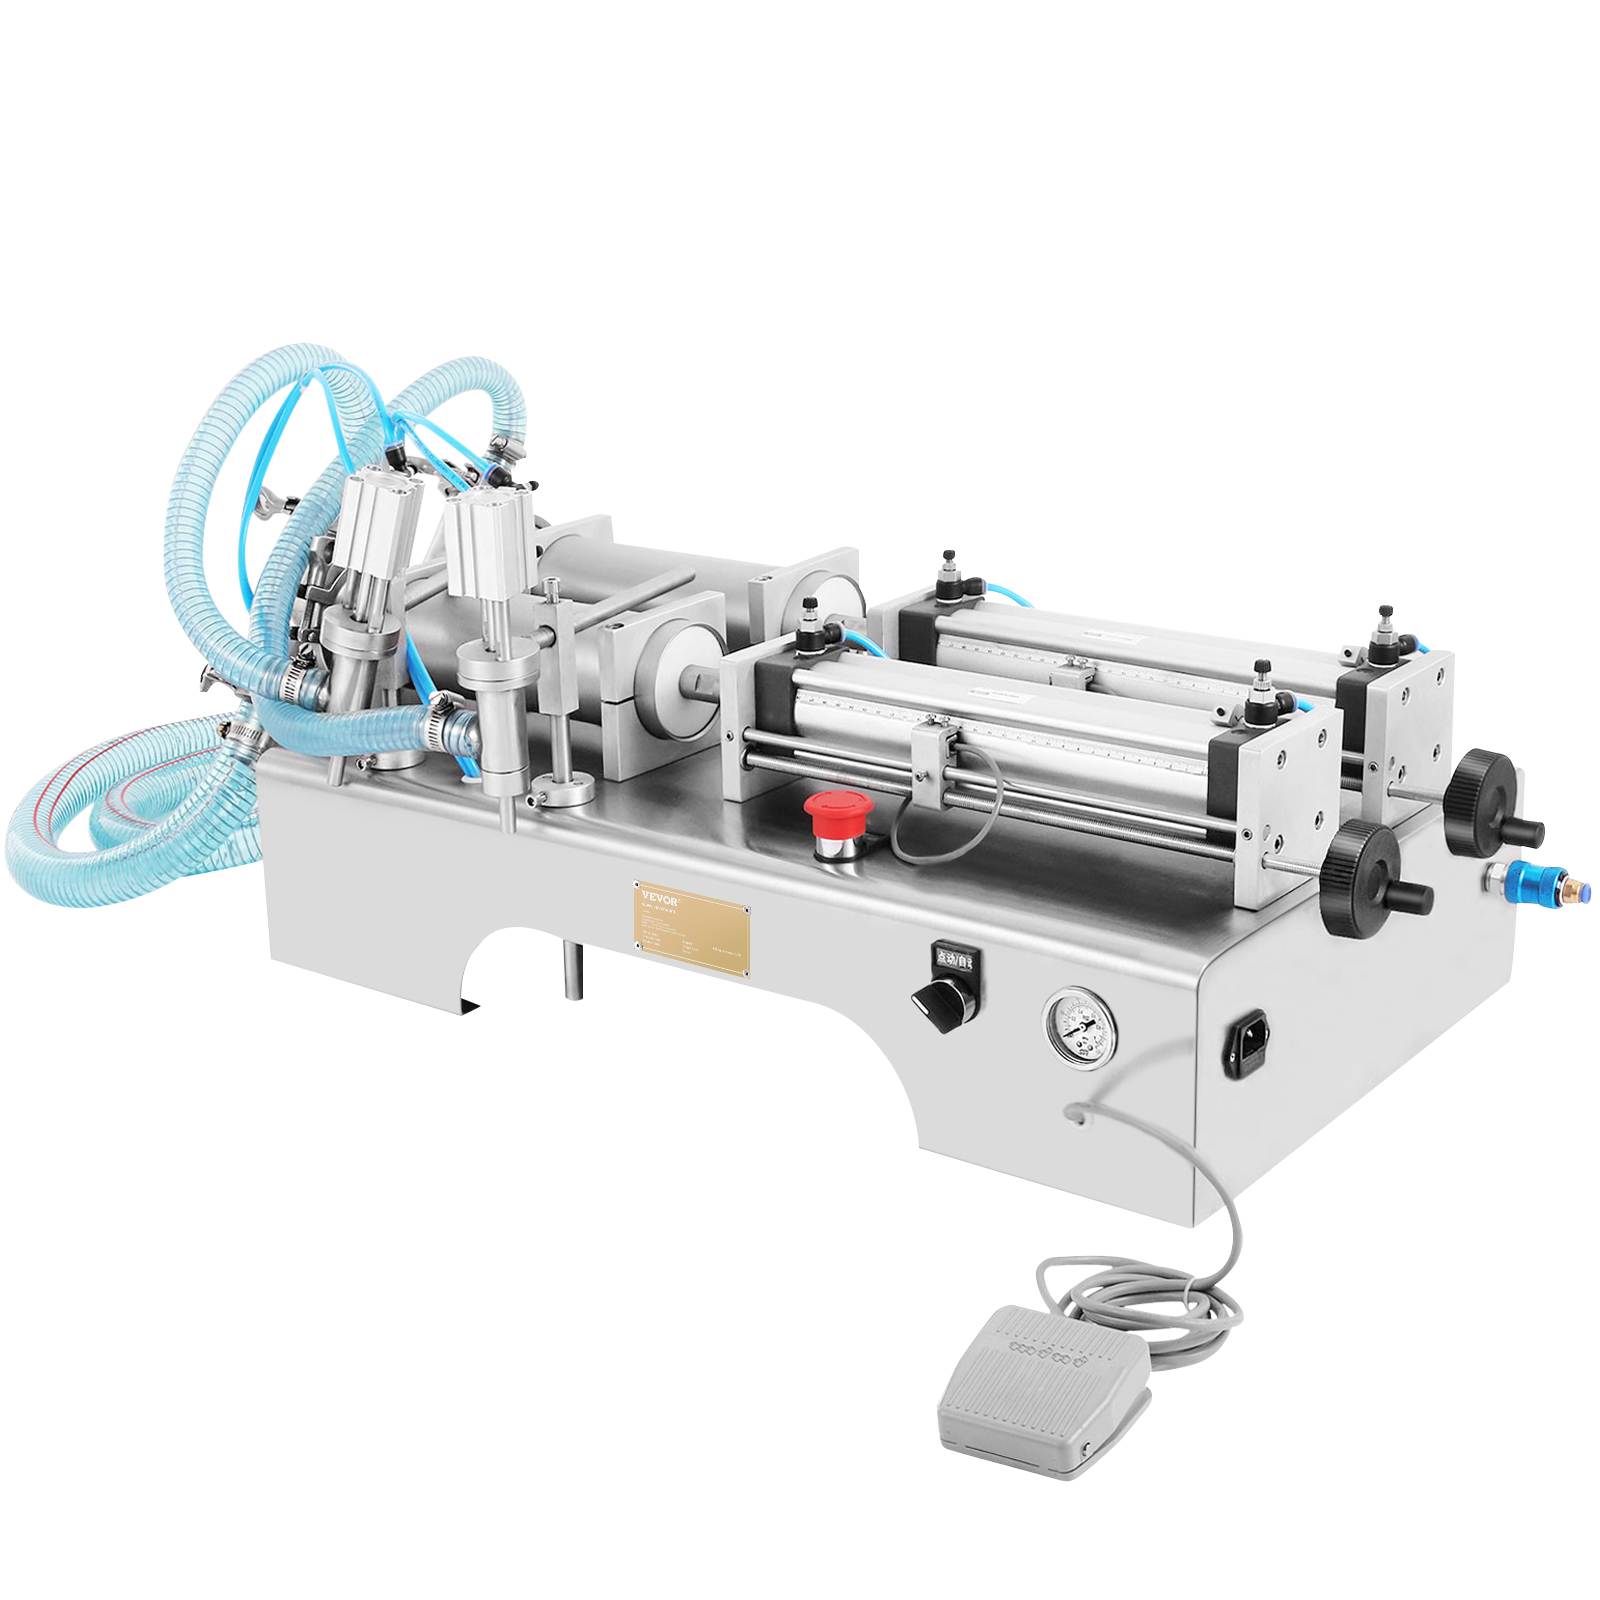 liquid filling machine,1.7-17 oz/50-500 ml,Pneumatic